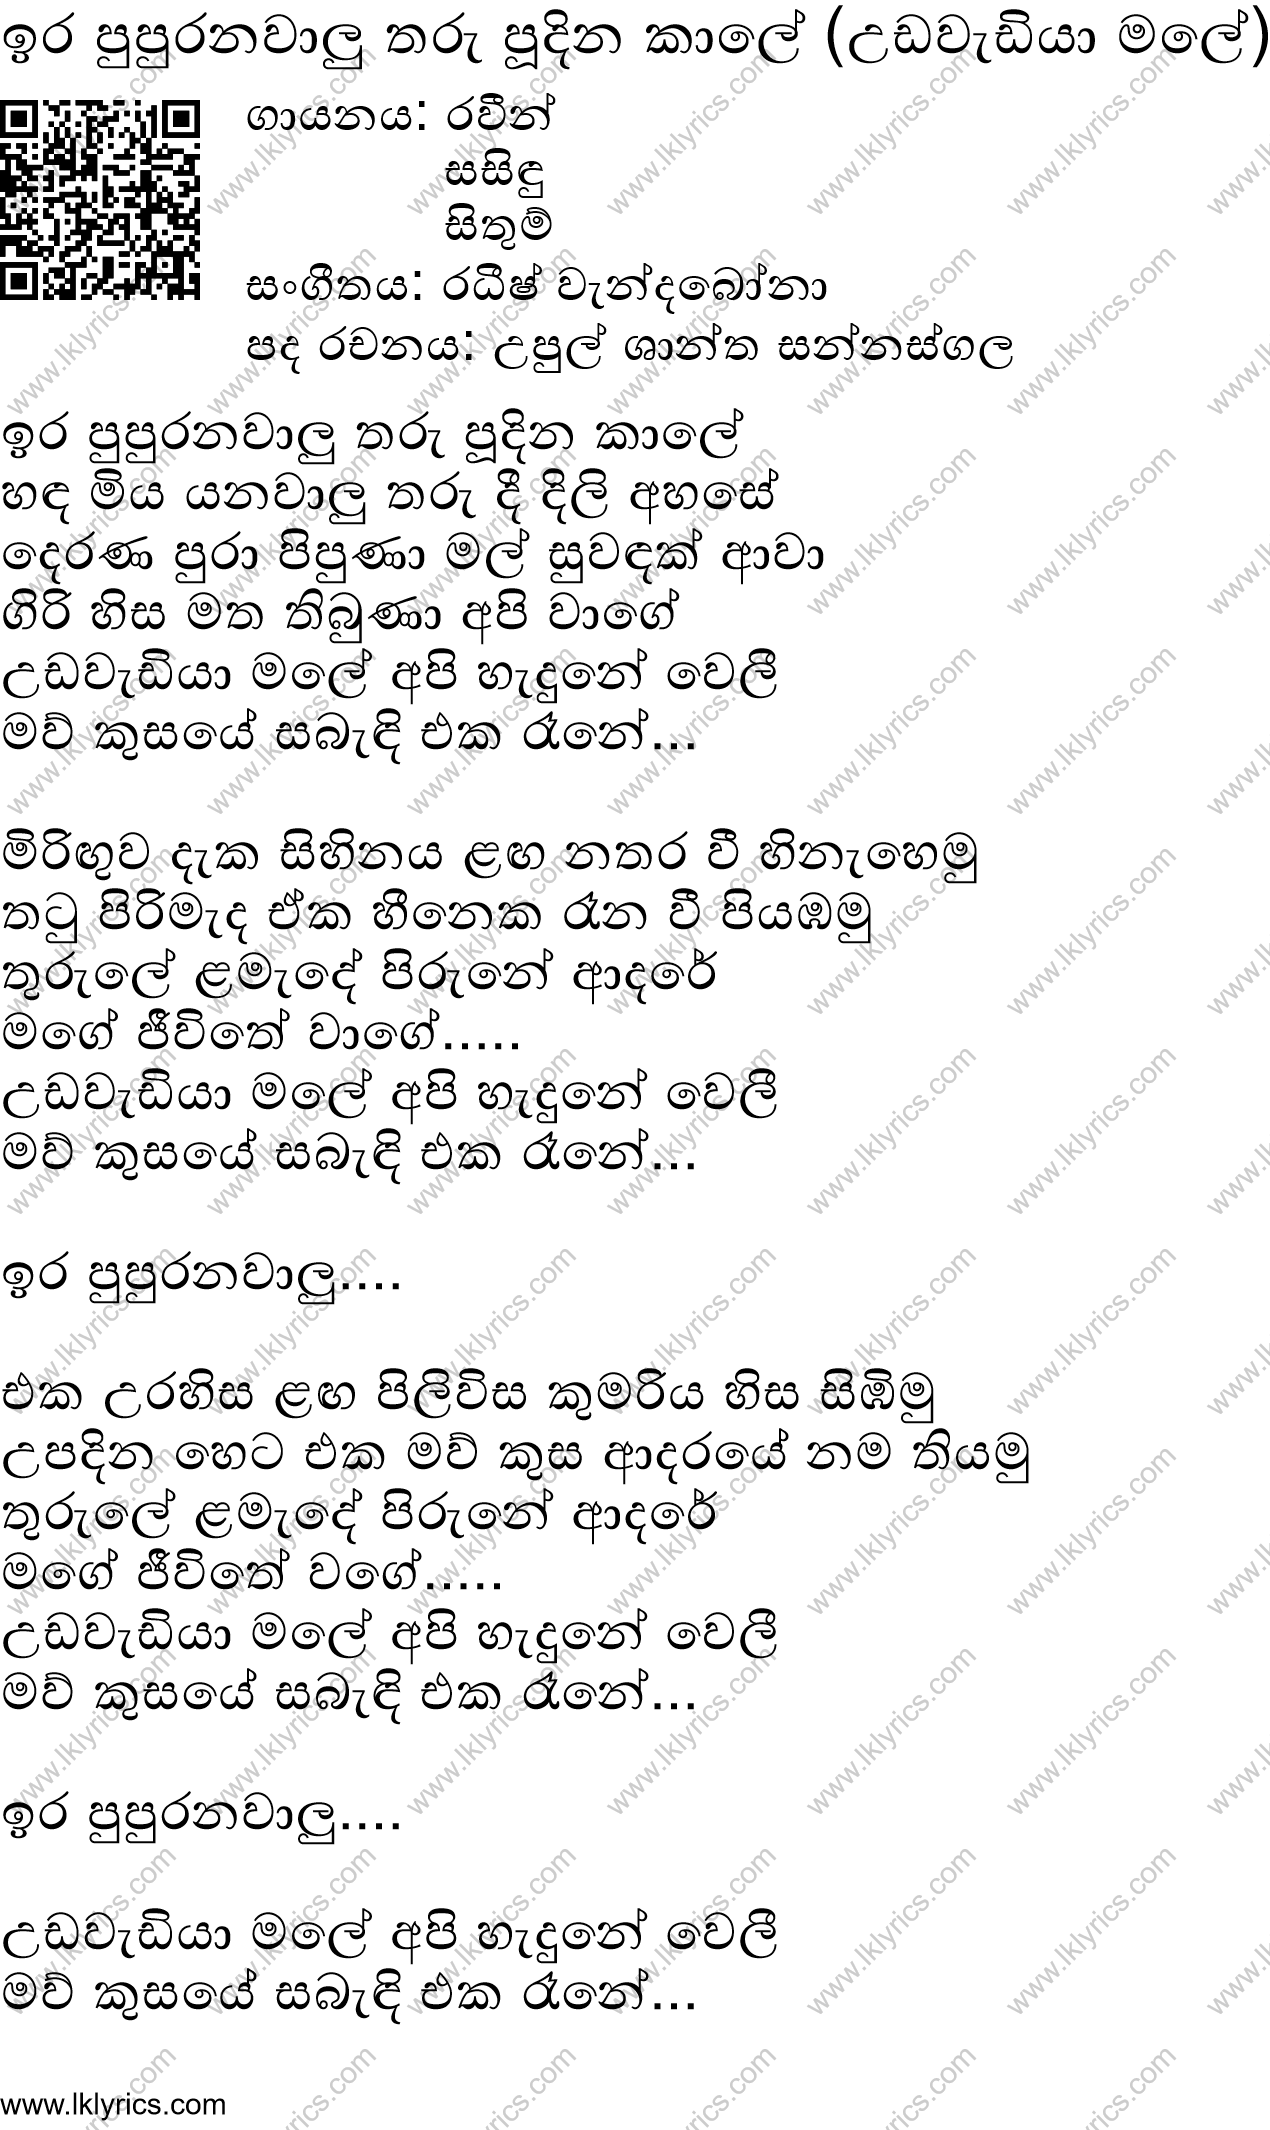 Ira Pupuranawalu Tharu Pudina Kale (Udawadiya Male) lyrics.